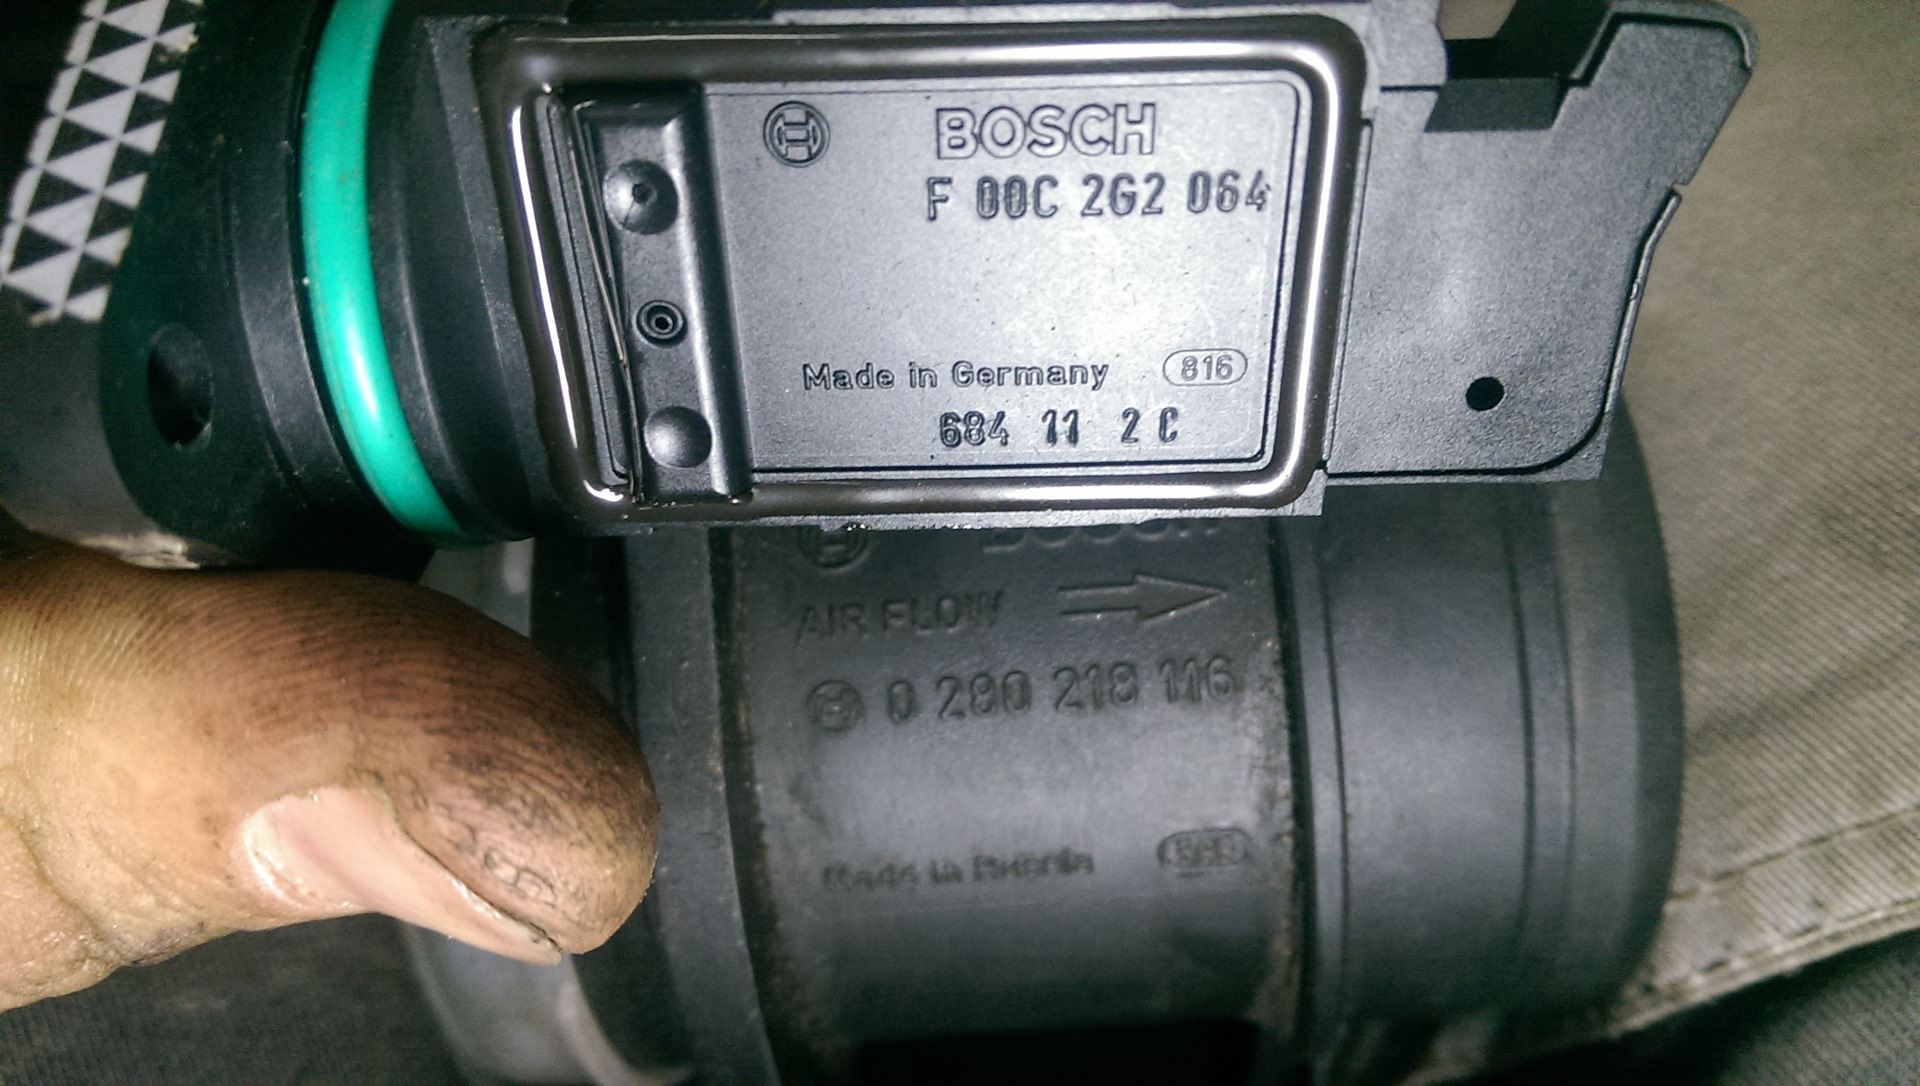 Ваз без дмрв. ДМРВ Калина 1.6 8кл. ДМРВ Калина 2 16 клапанов. ДМРВ 116 Bosch. ДМРВ Bosch f 00c 2g2 060 Озон.